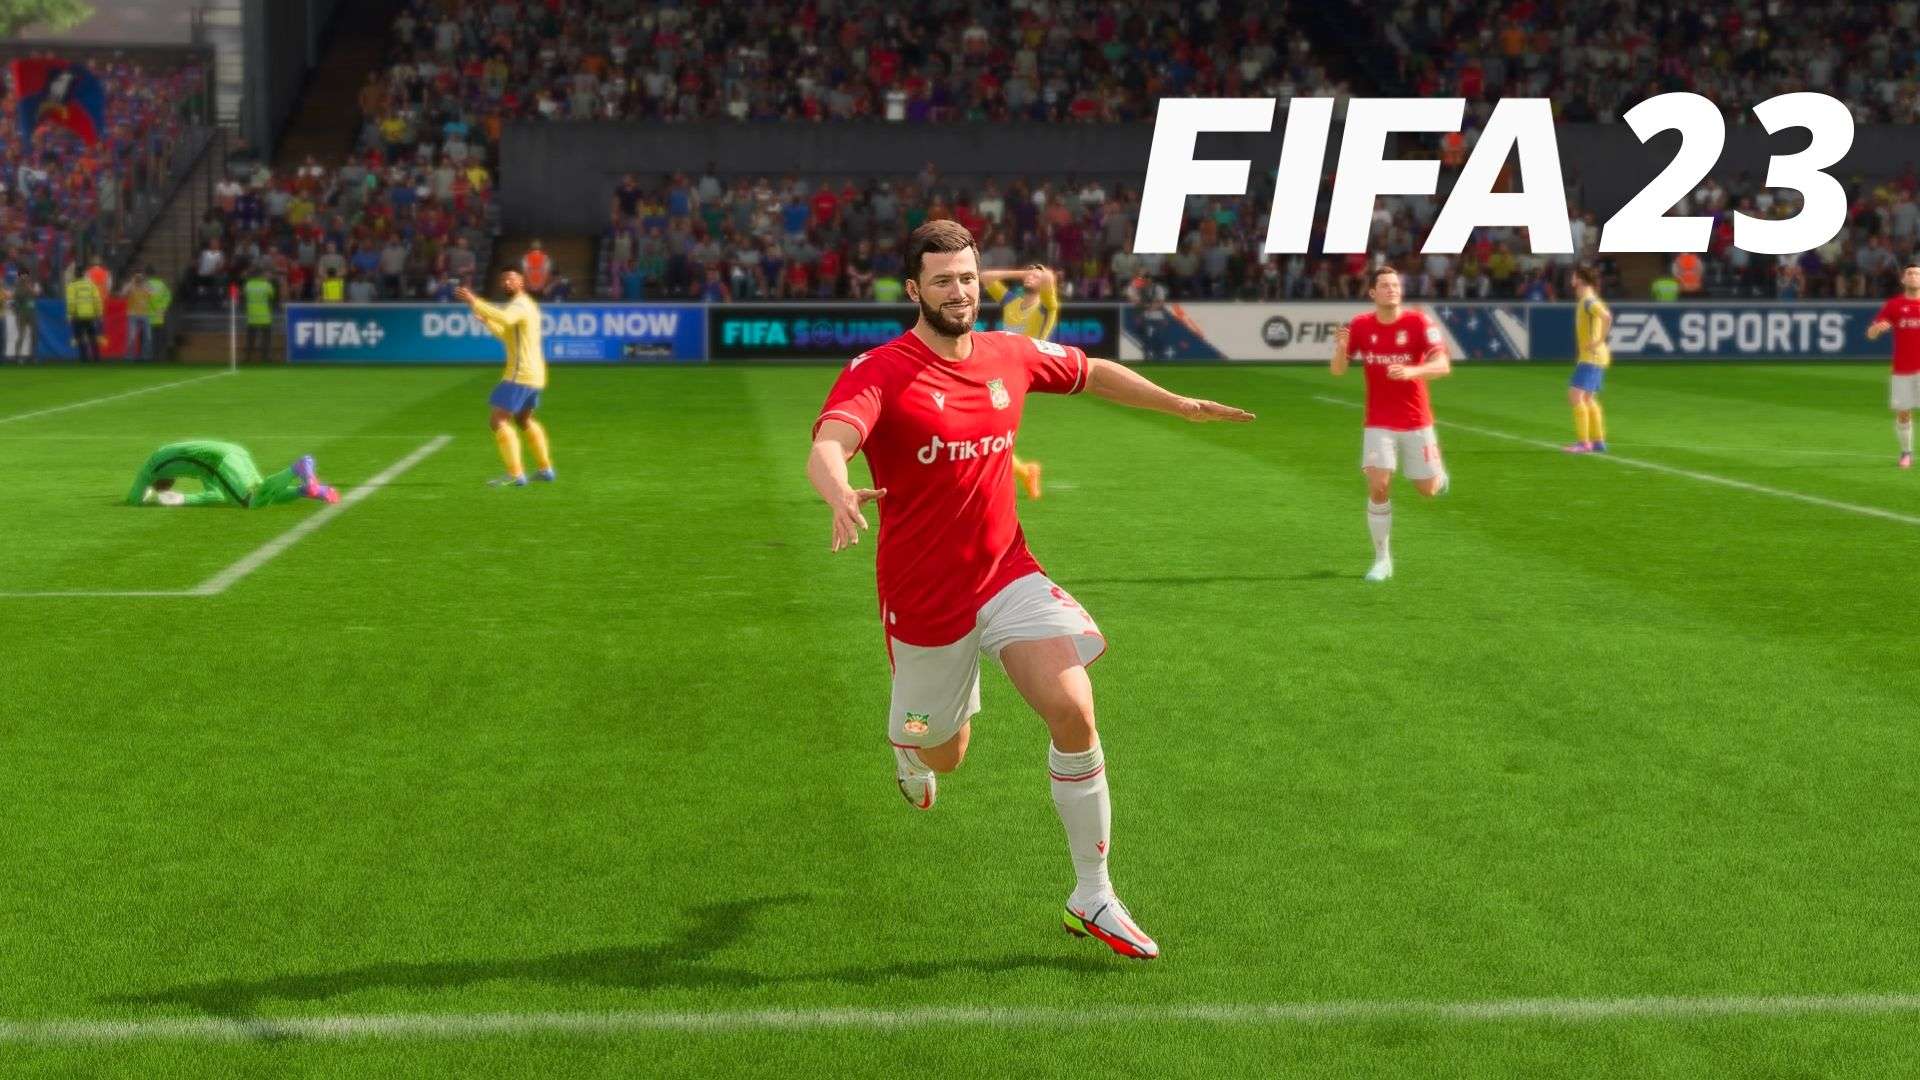 Wrexham player in FIFA 23 celebrating